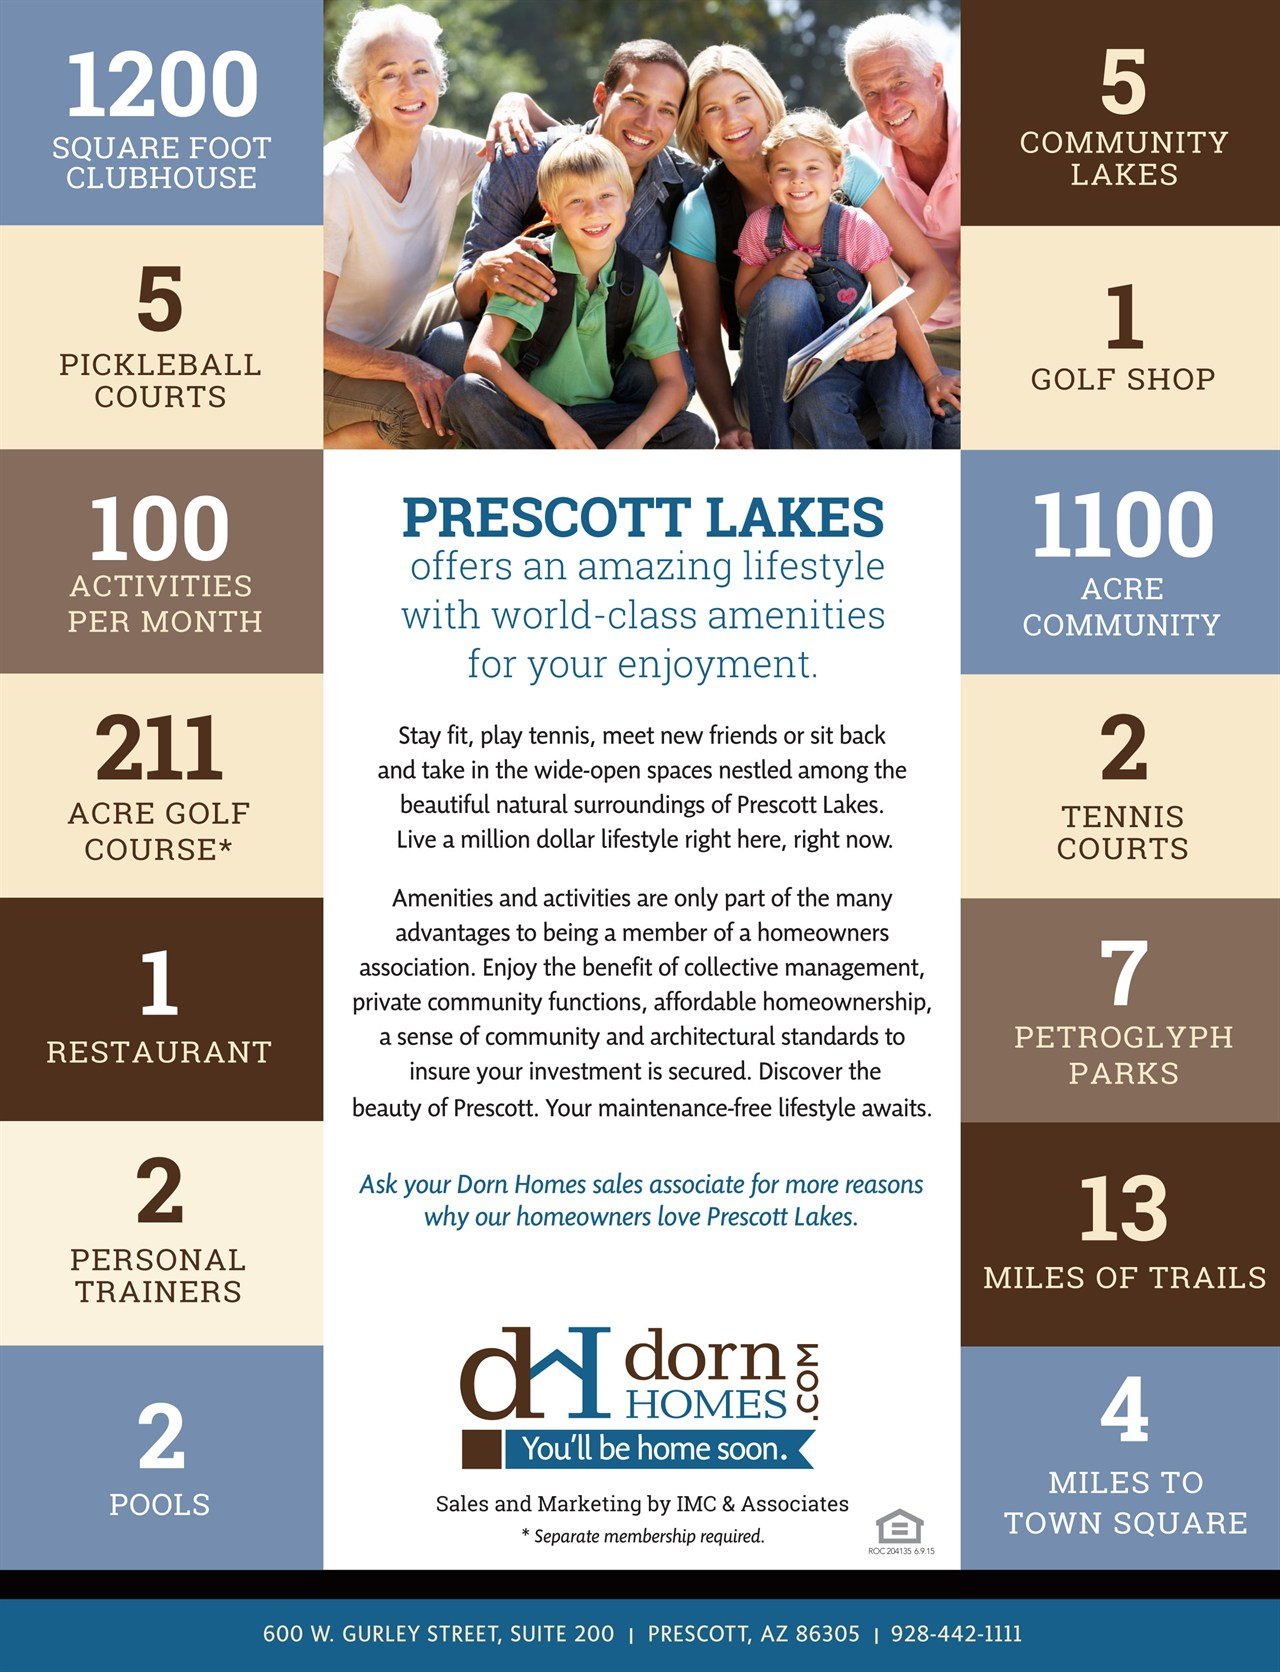 Million Dollar Lifestyle at Prescott Lakes